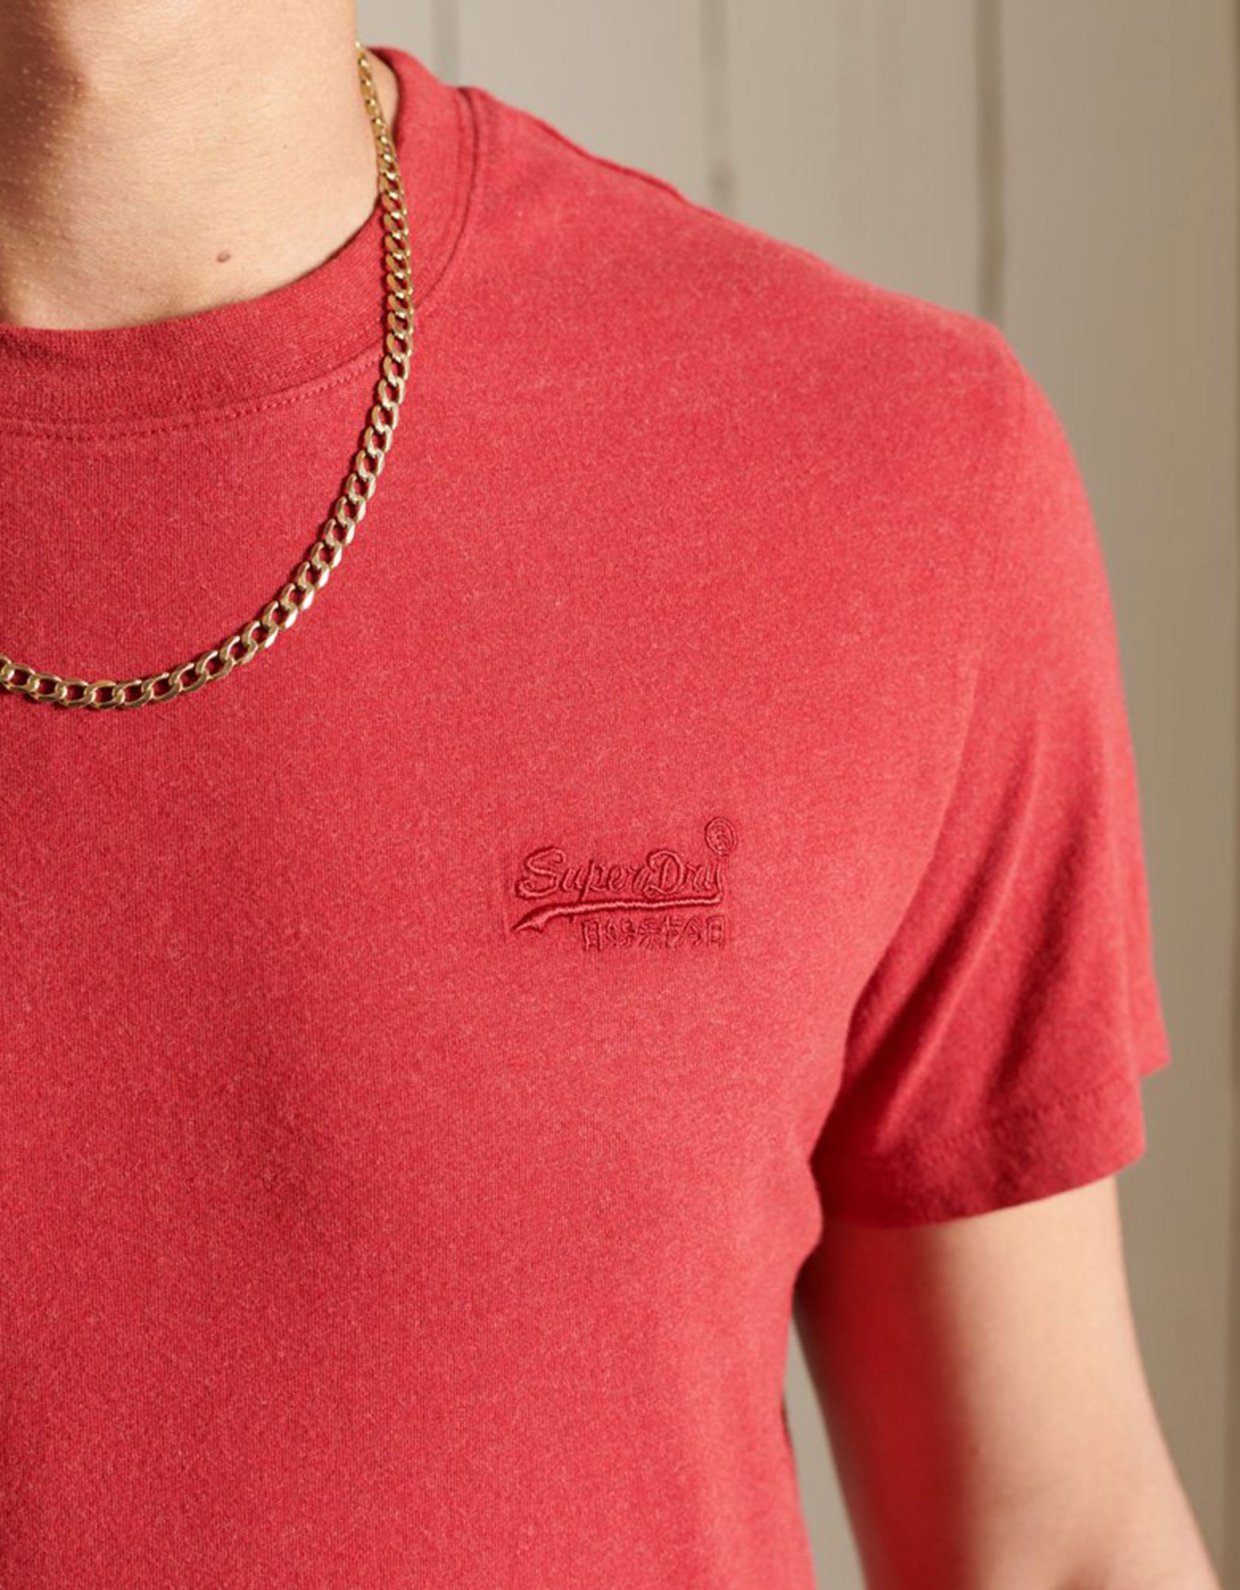 Superdry Vintage logo embroidered tee work red marl